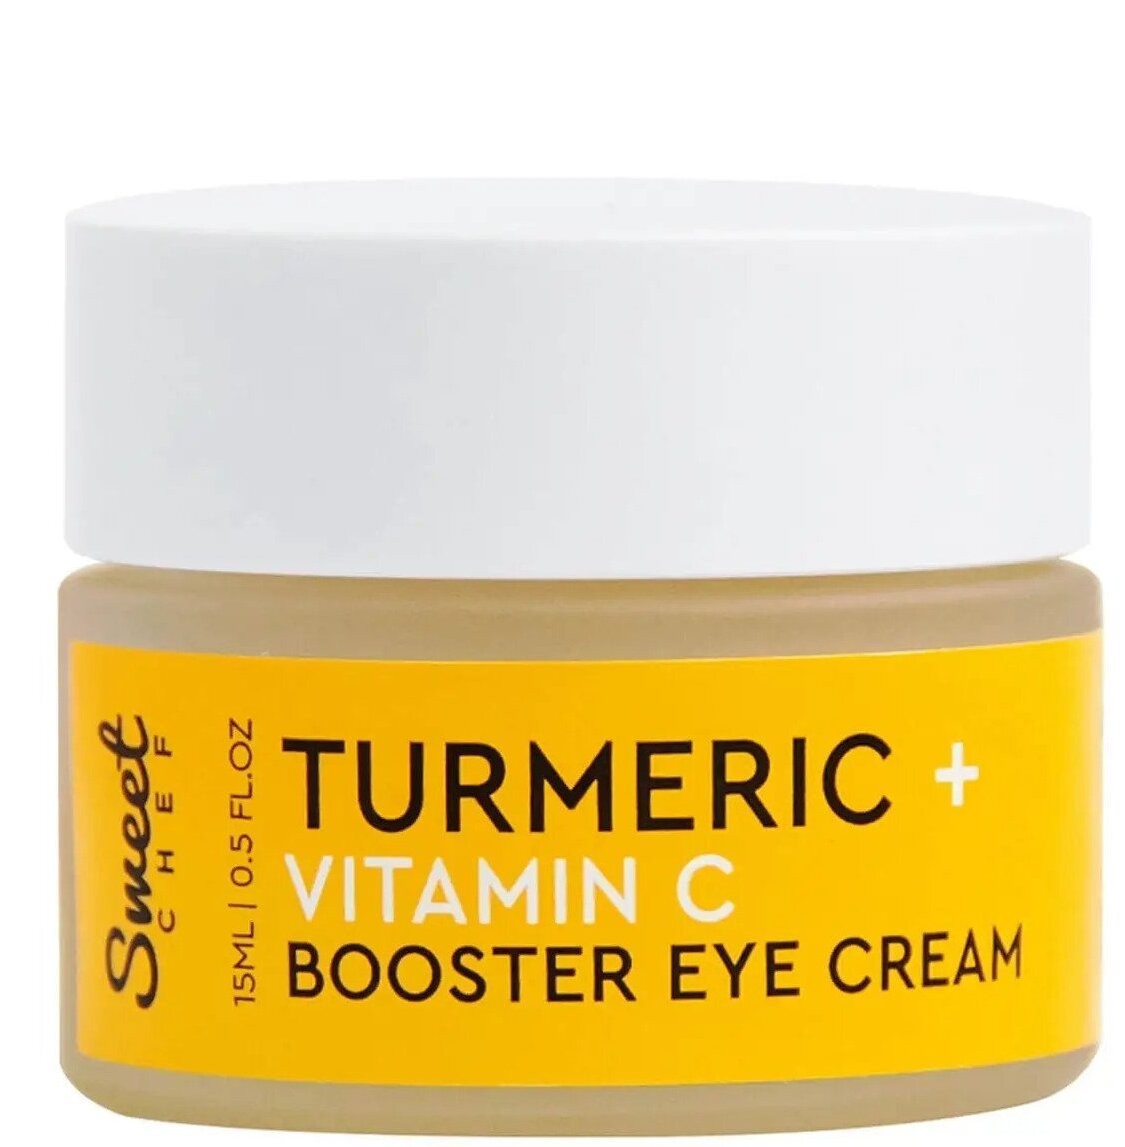 Sweat Chef Turmeric + Vitamin C Booster Eye Cream